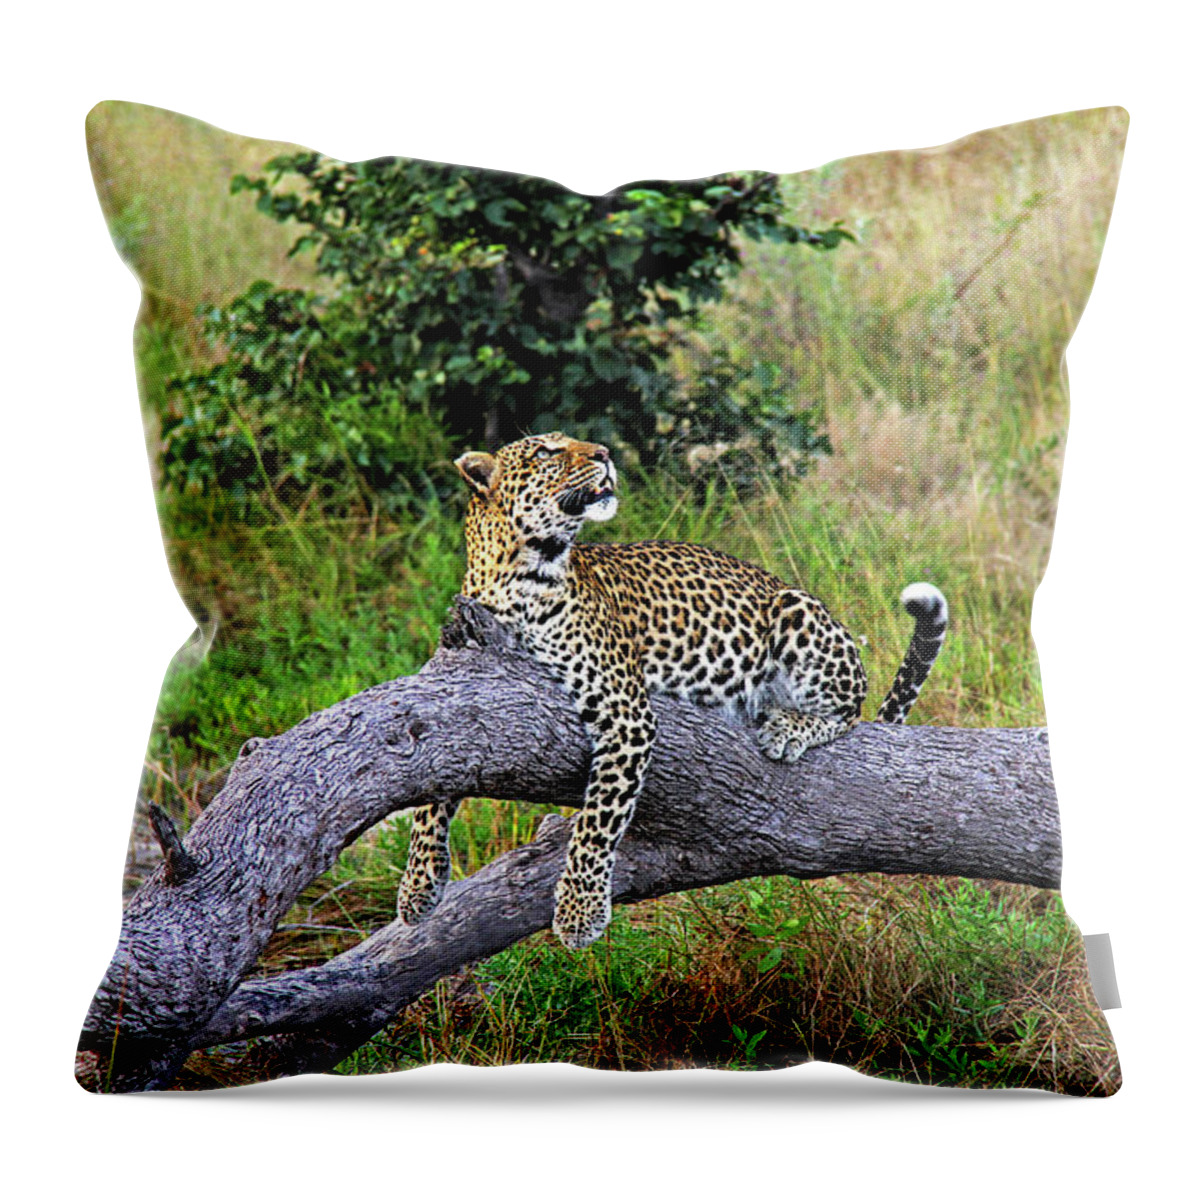 Leopard Throw Pillow featuring the photograph Leopard - Botswana, Africa by Richard Krebs